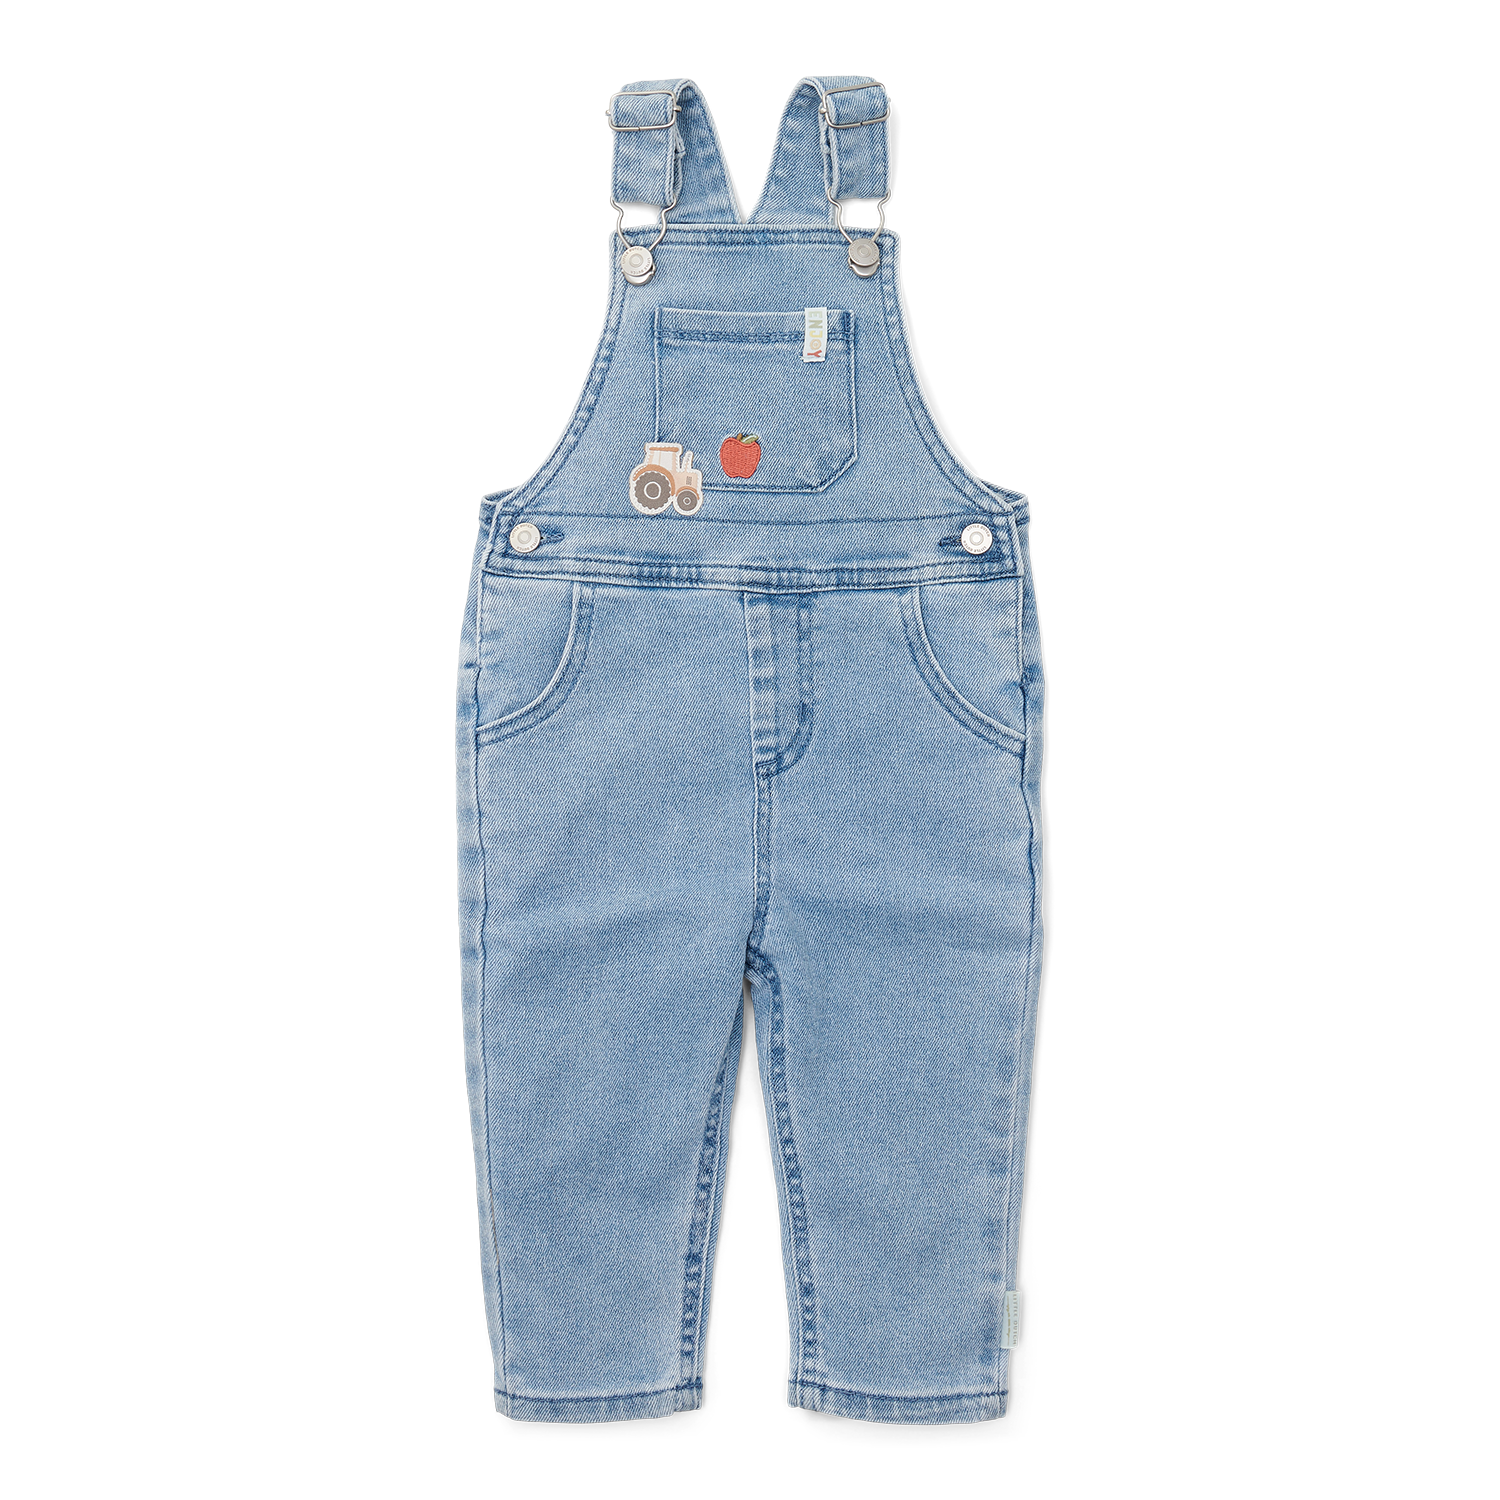 Latzhose Denim Little Farm jeans (Gr. 74)